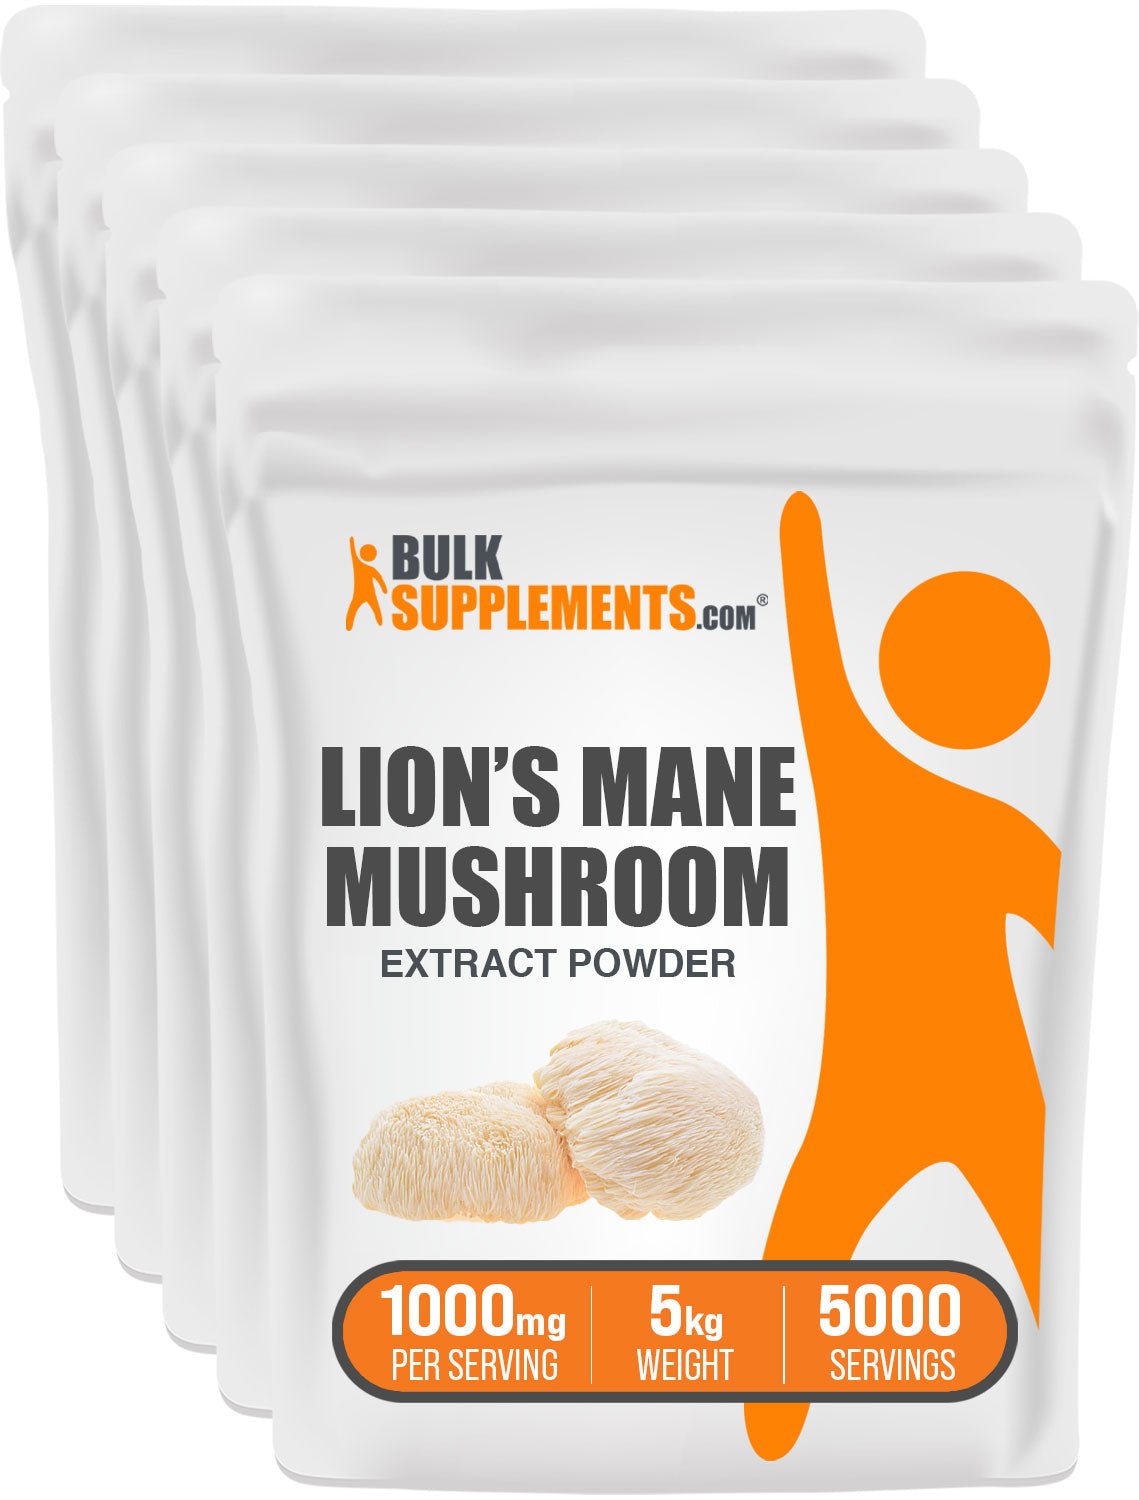 Lion's Mane Mushroom Extract Powder 5kg